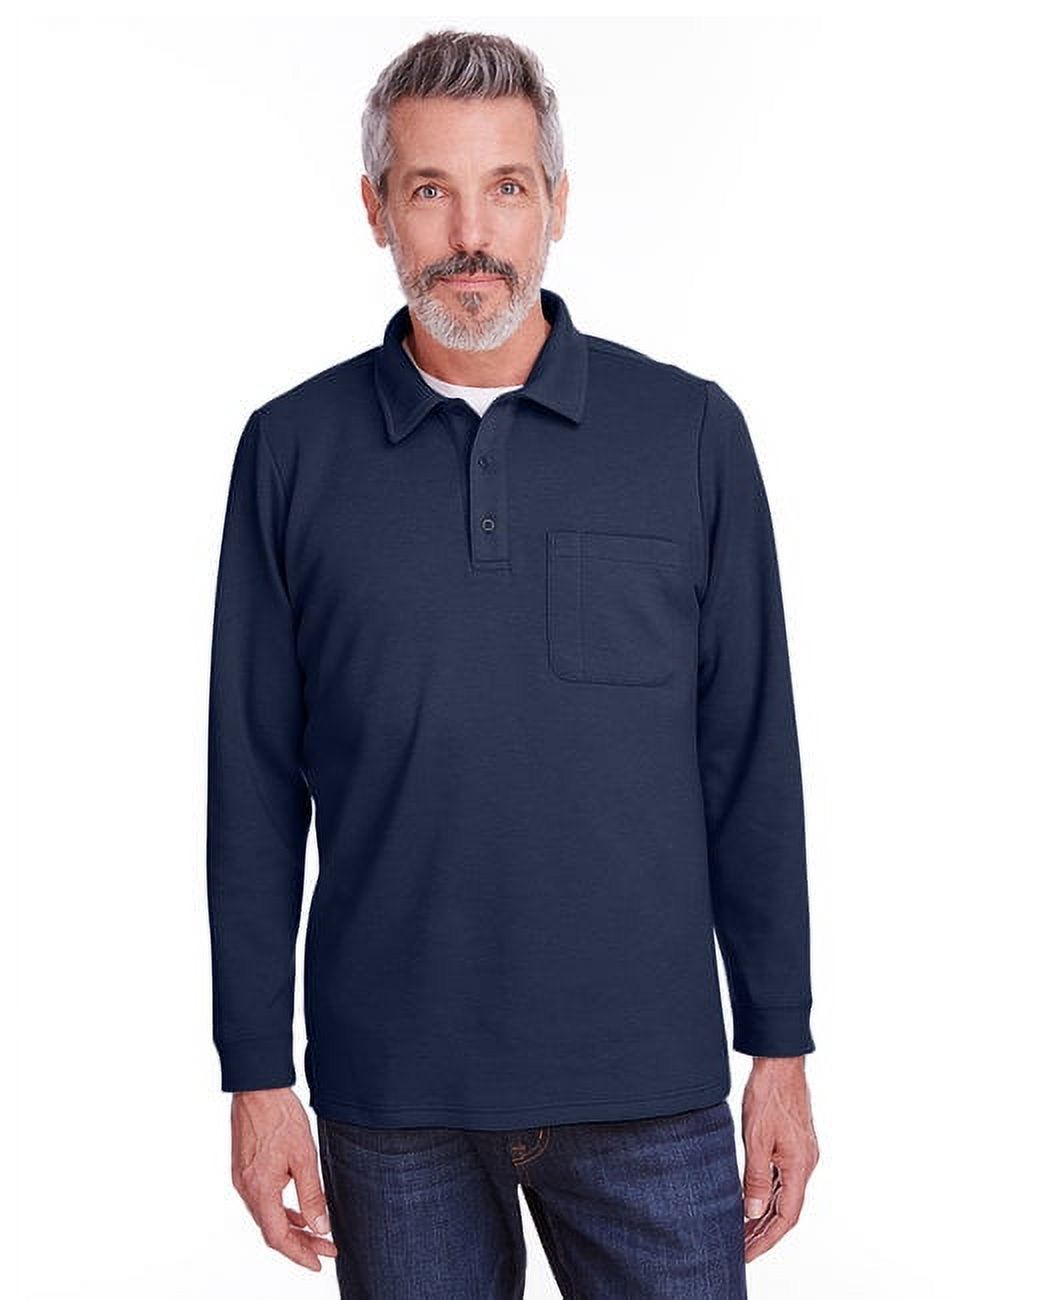 Adult StainBloc™ Pique Fleece Pullover Jacket - DARK NAVY - M - image 1 of 2